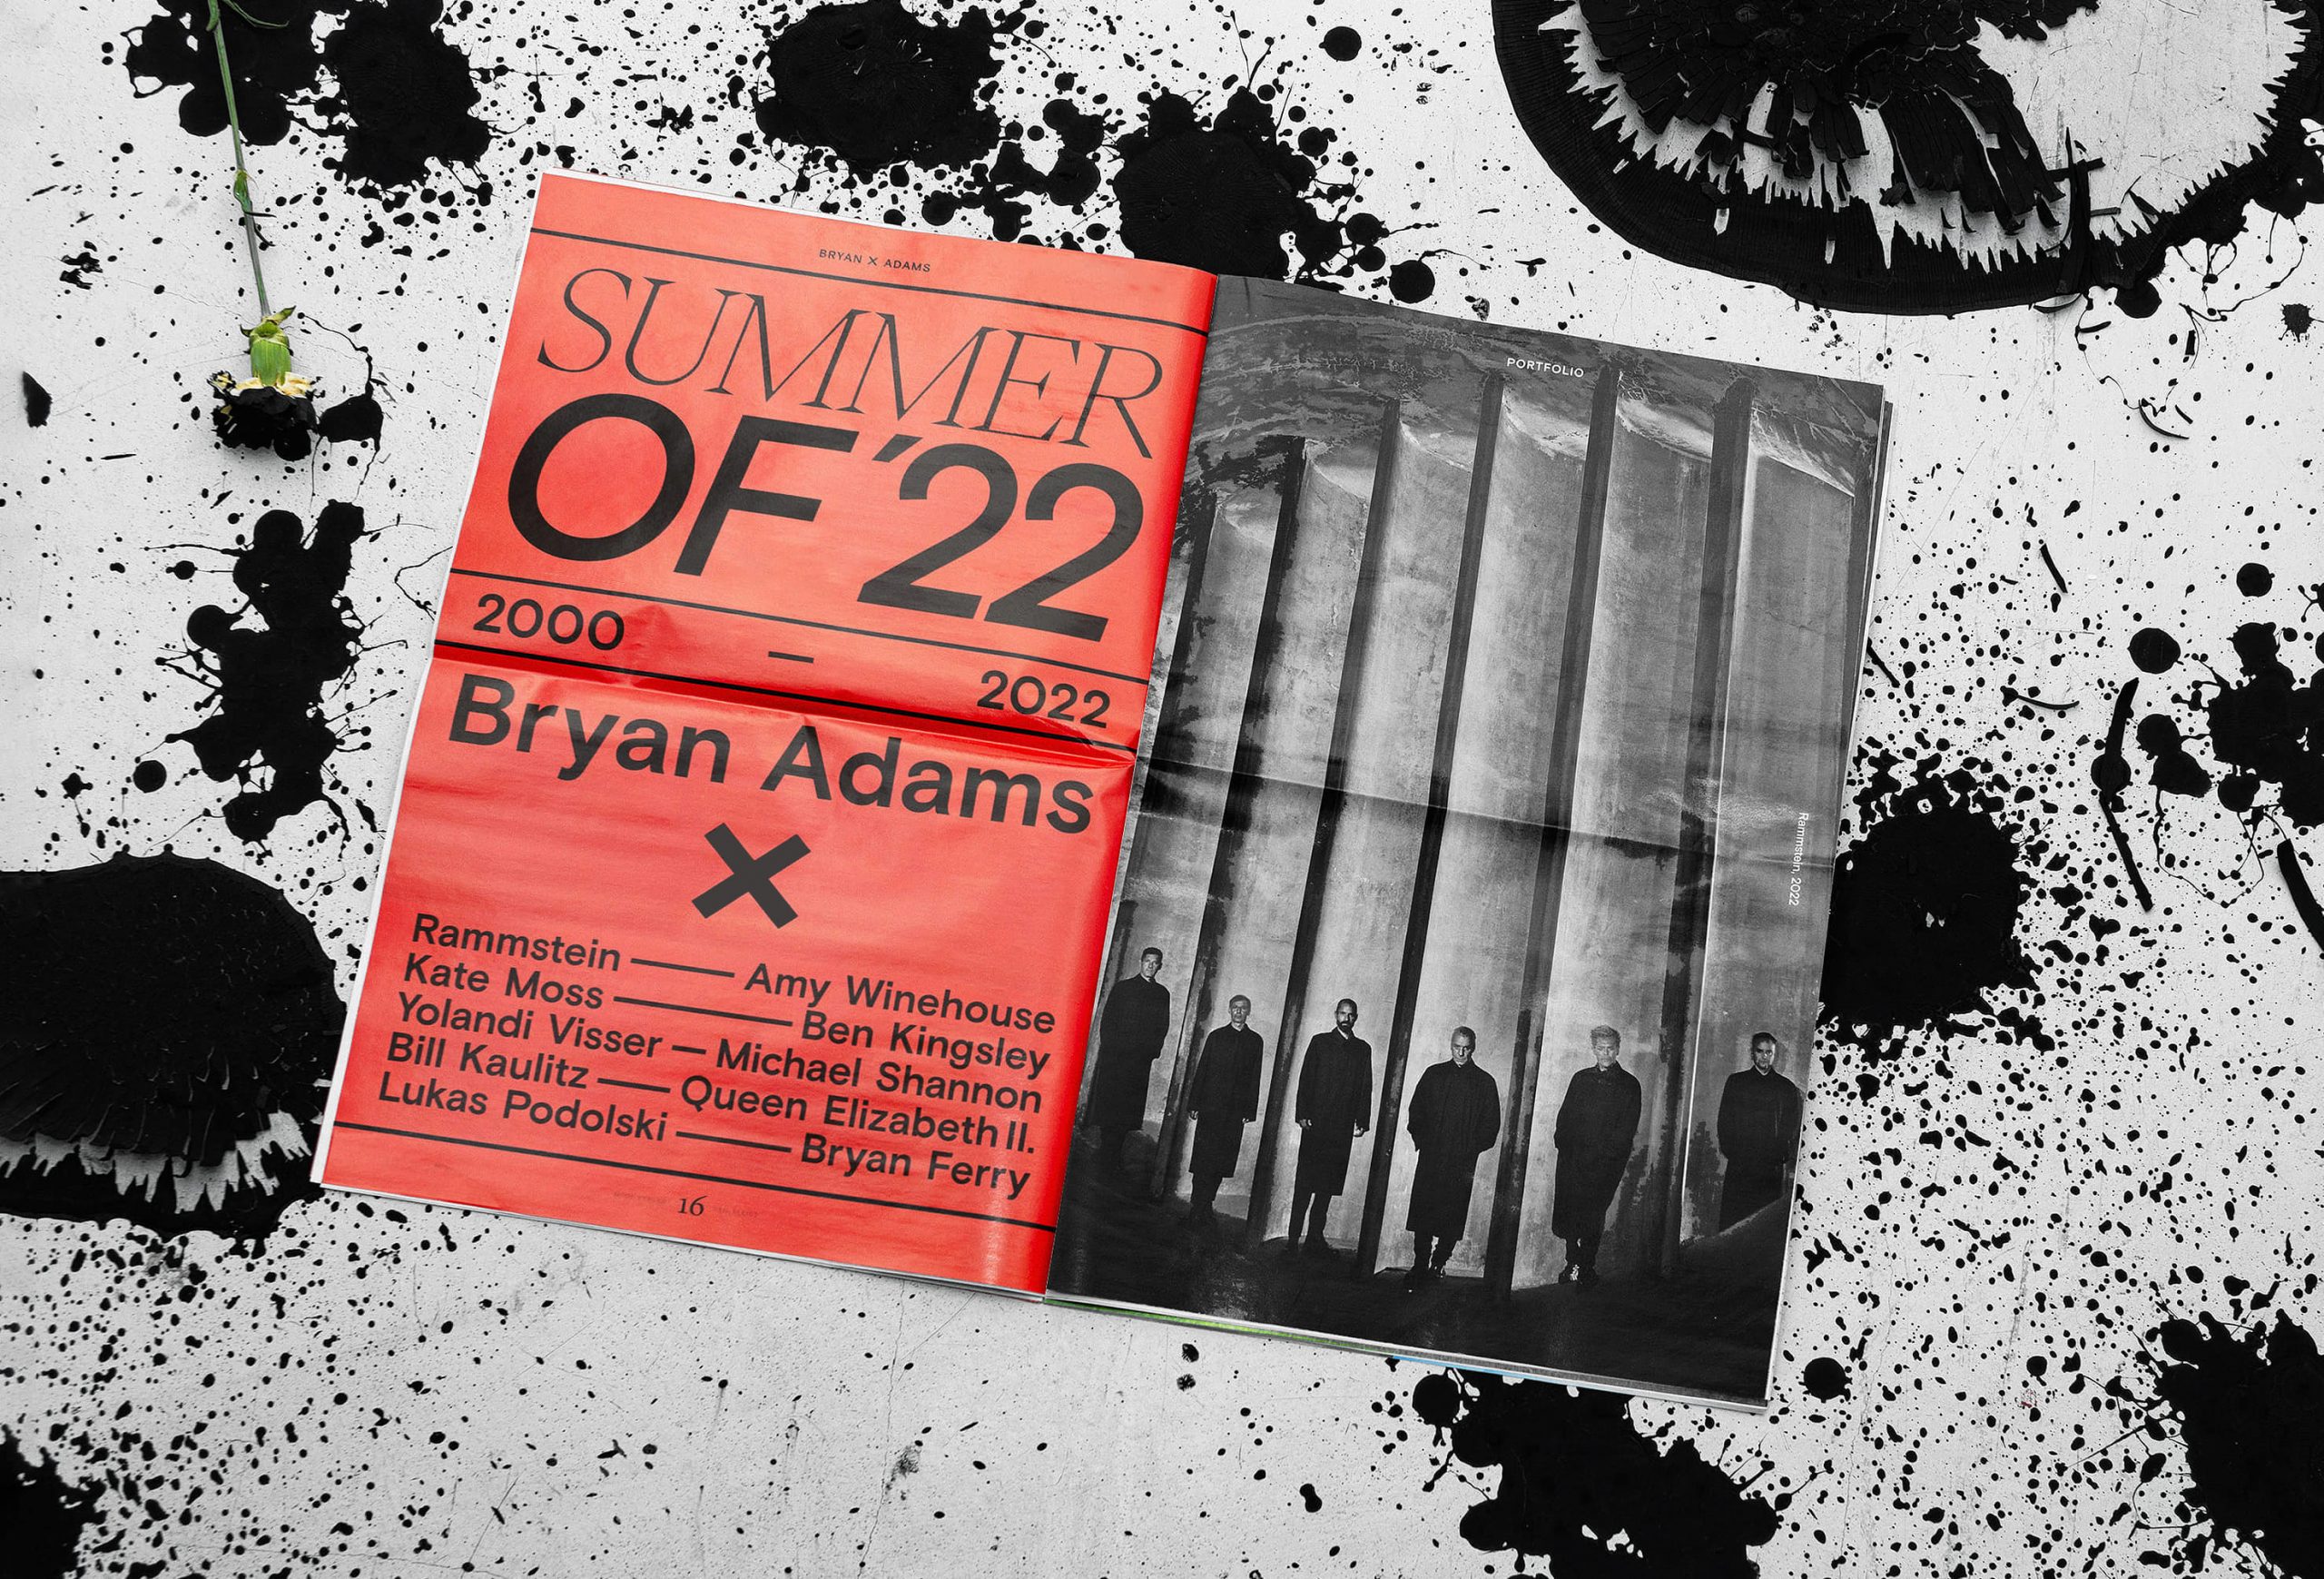 <p><em>Bryan Adams</em> <span style="font-size: 14pt;">x </span><em>Bryan Adams</em> – Magazine</p>
